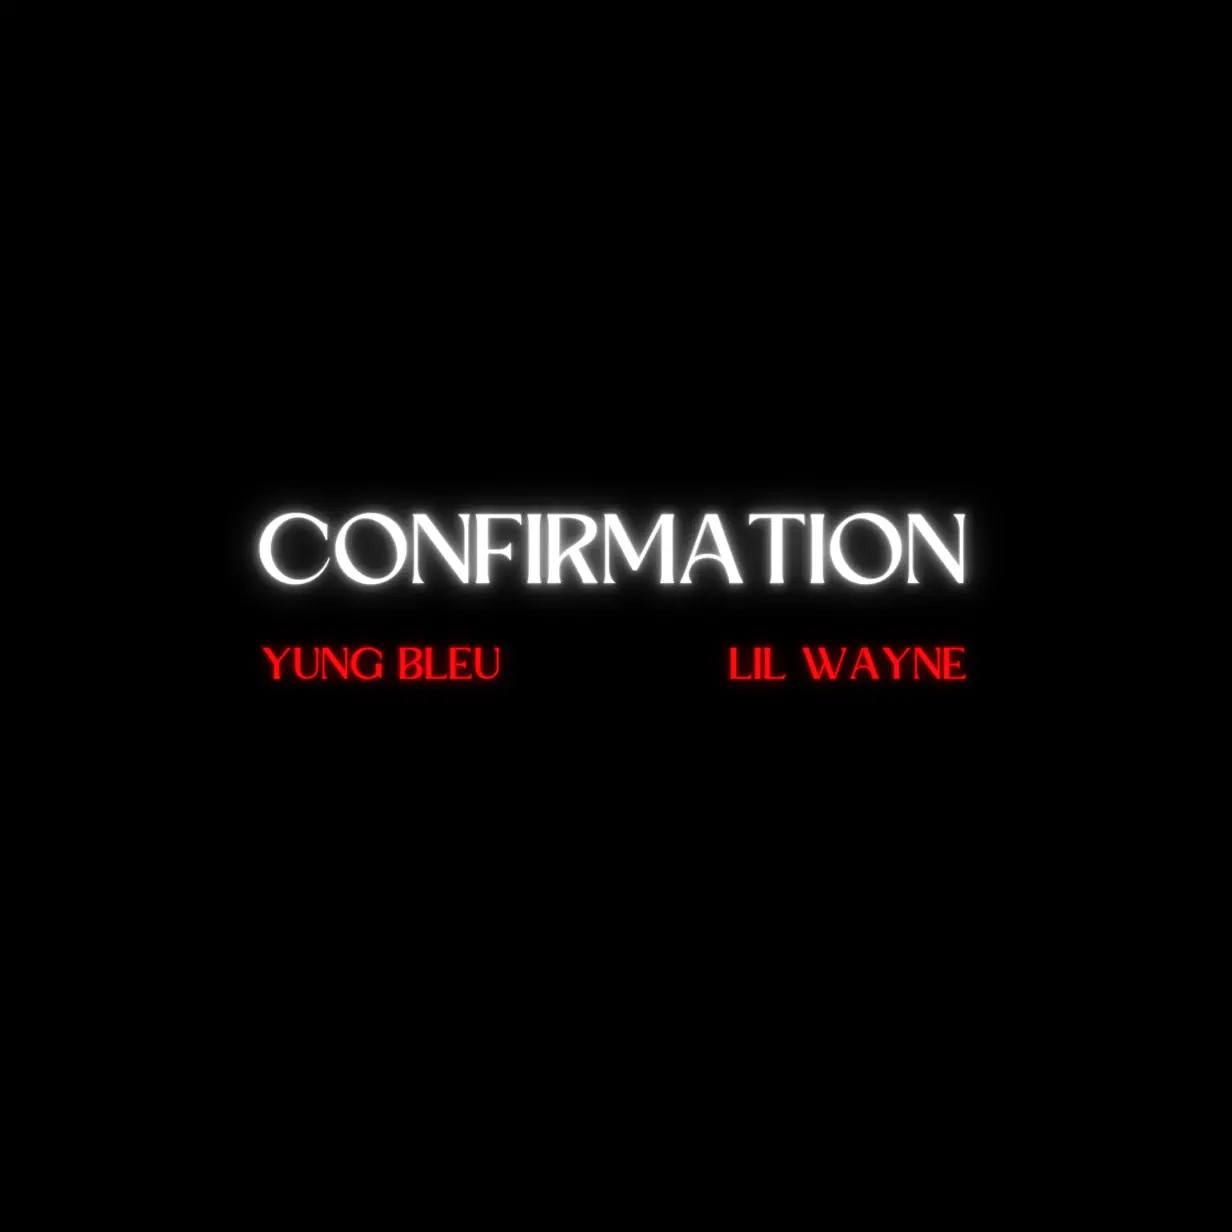 Yung Bleu‘s “Confirmation” (Remix) feat. Lil Wayne MP3 Download Free Audio